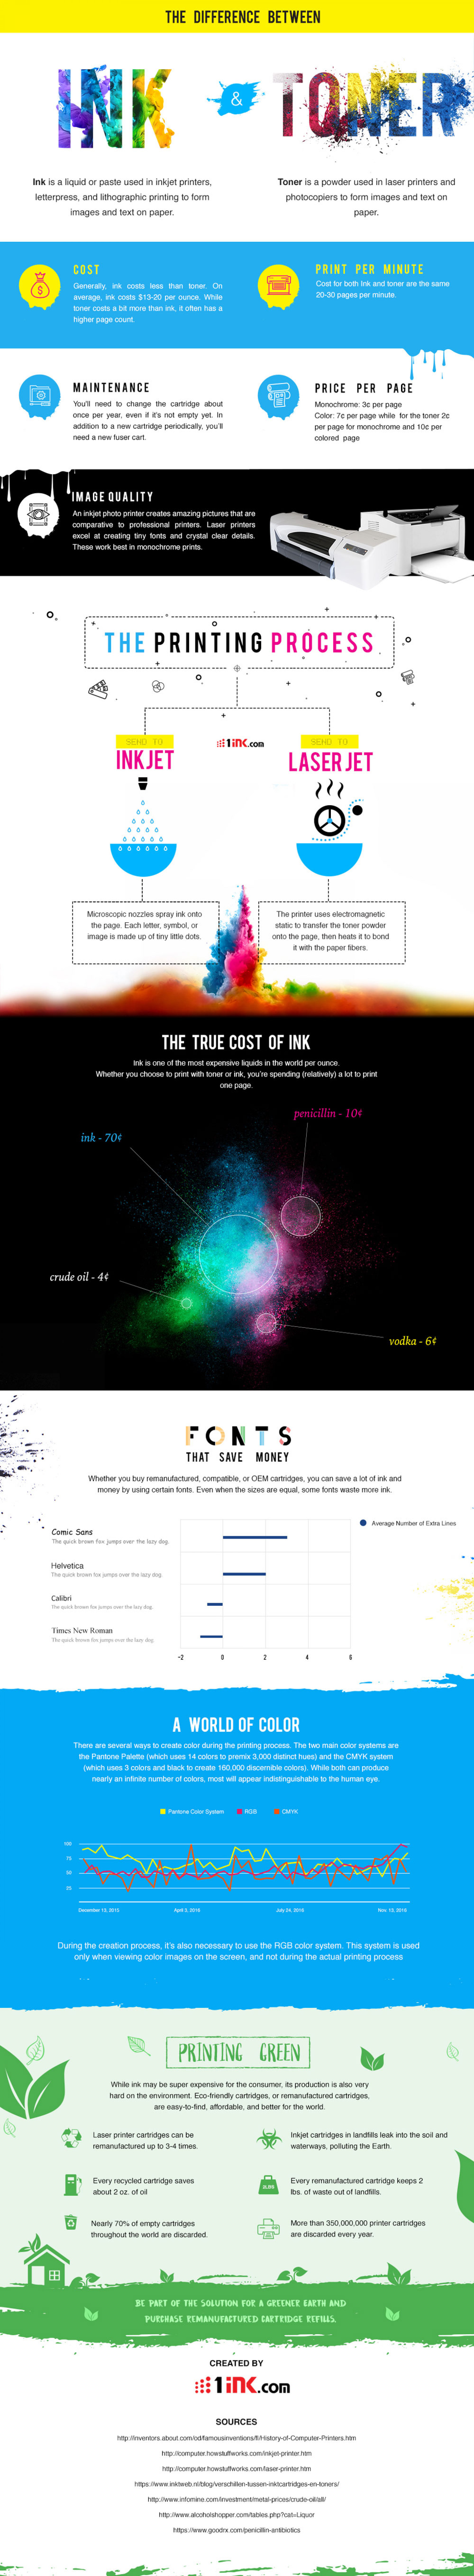 Ink vs Toner Infographic